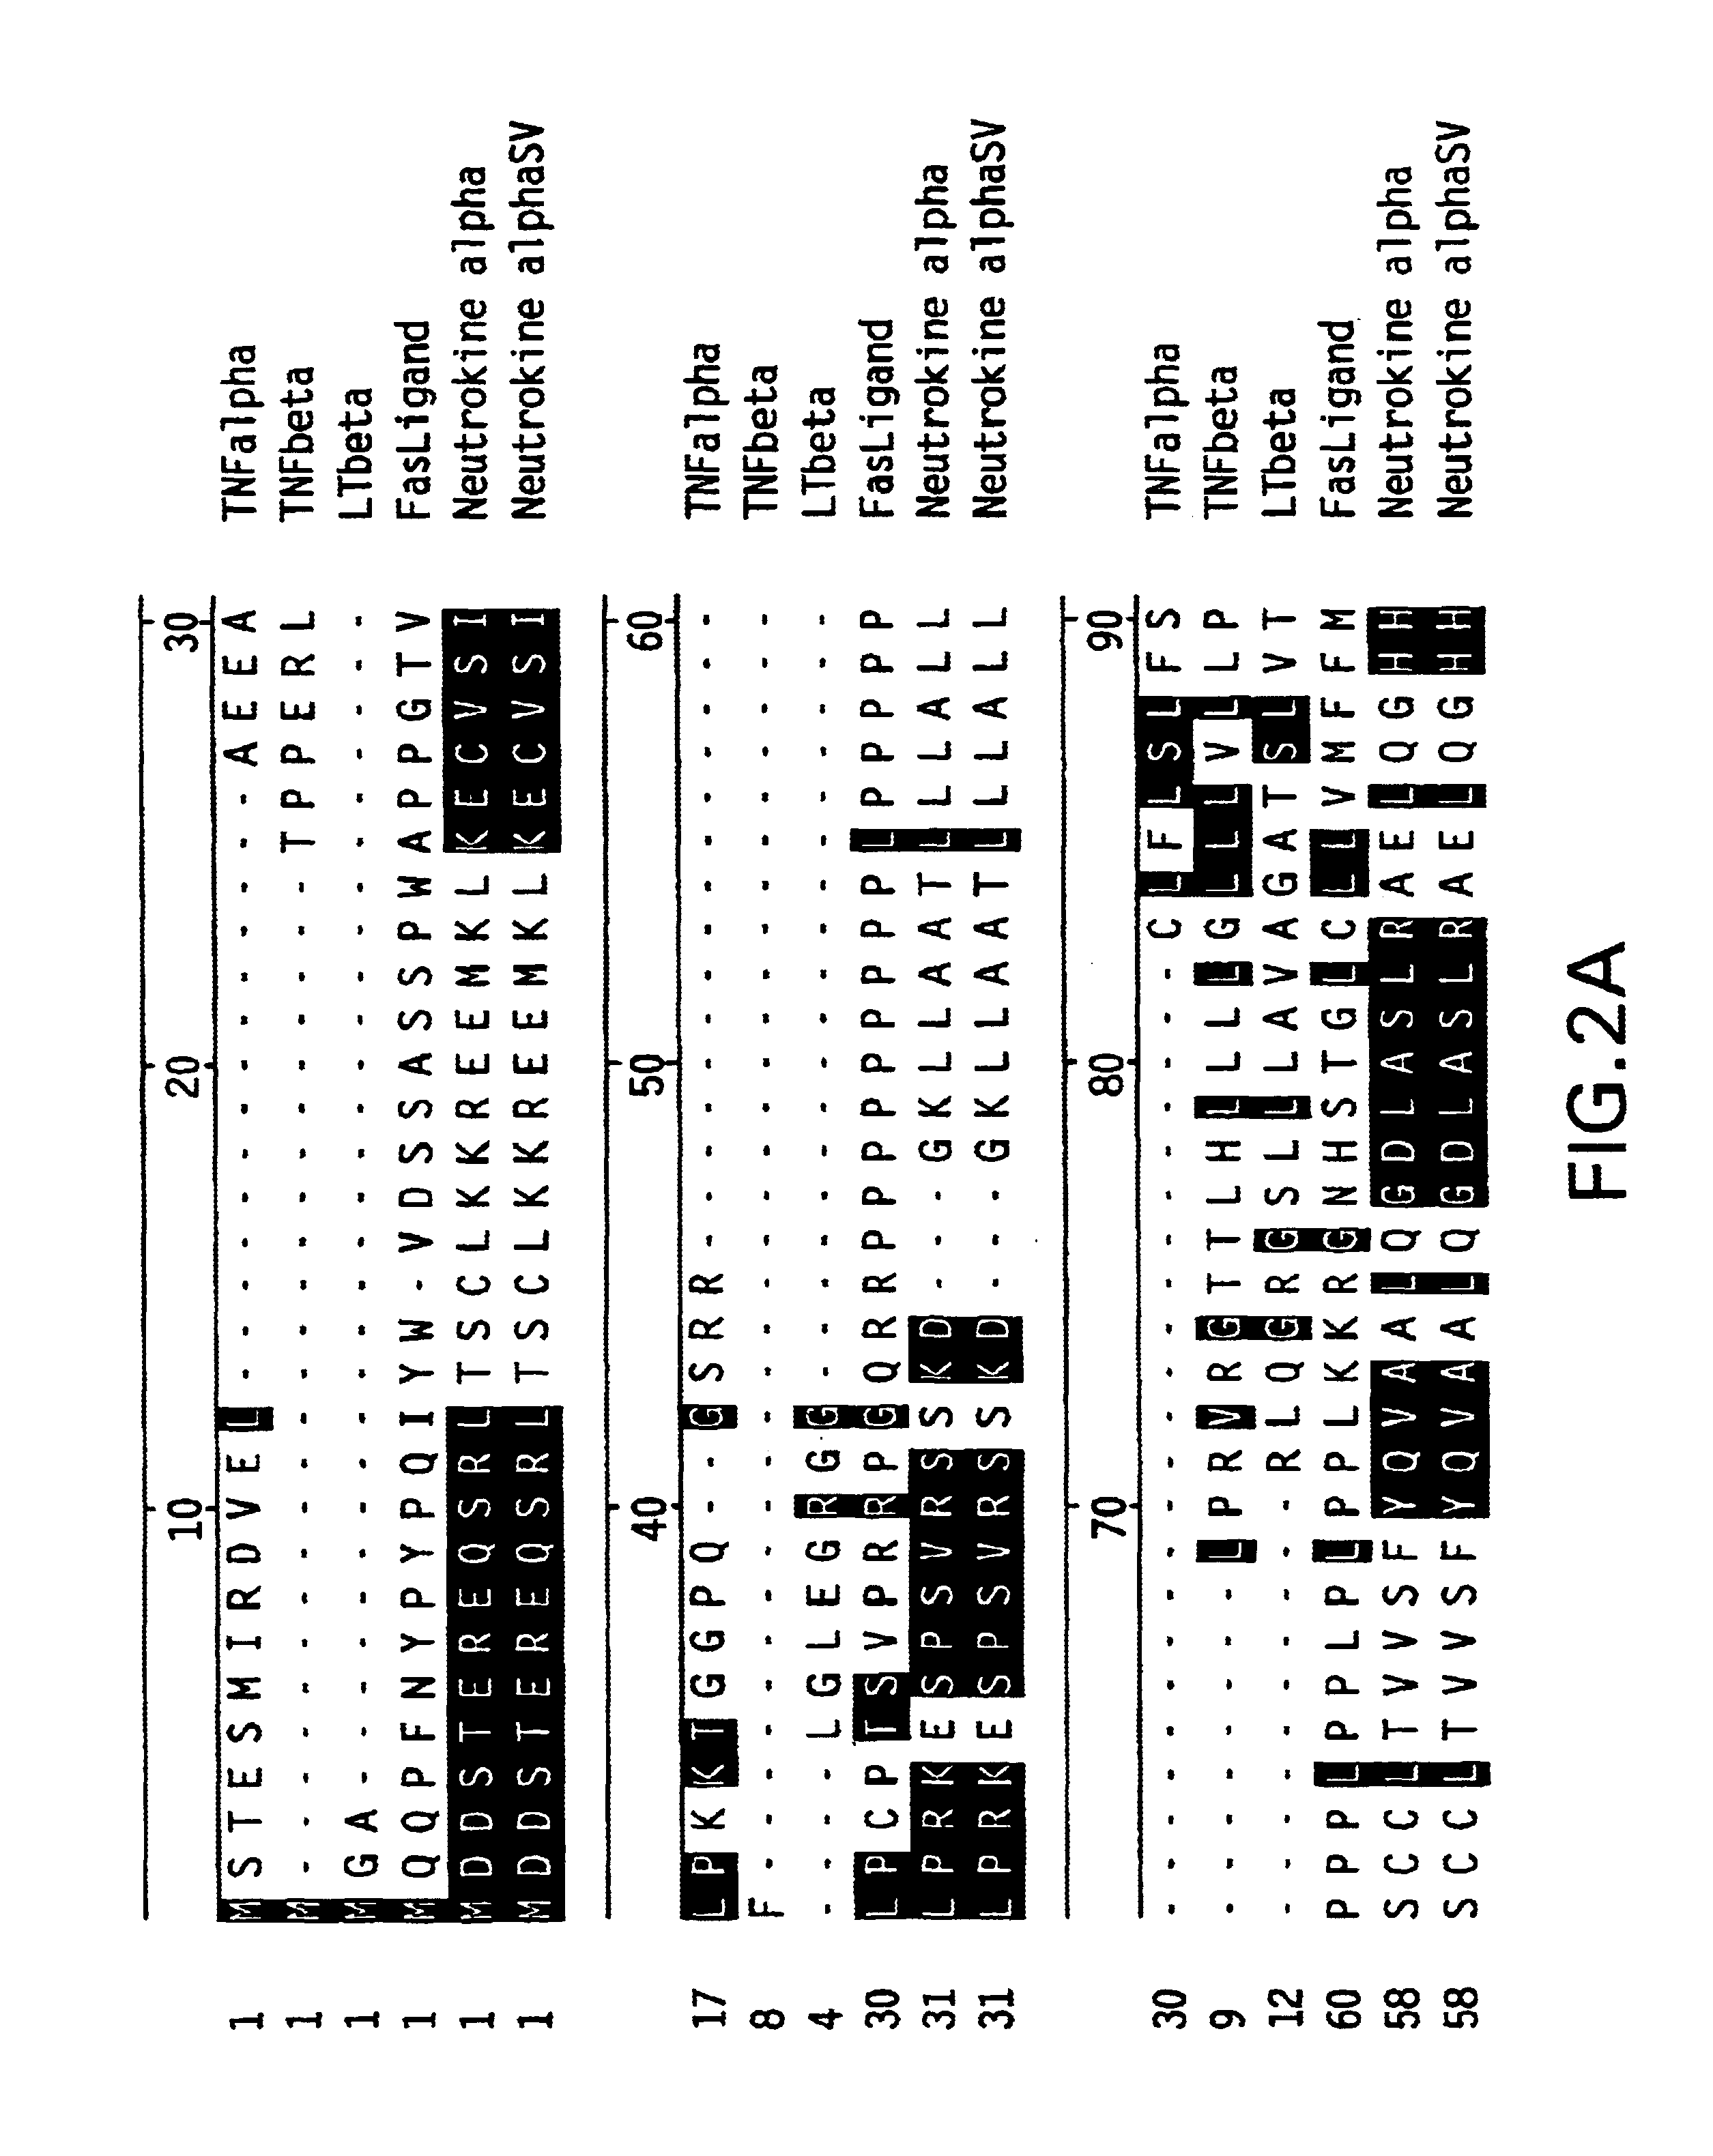 Method of assaying Neutrokine-alpha mRNA level